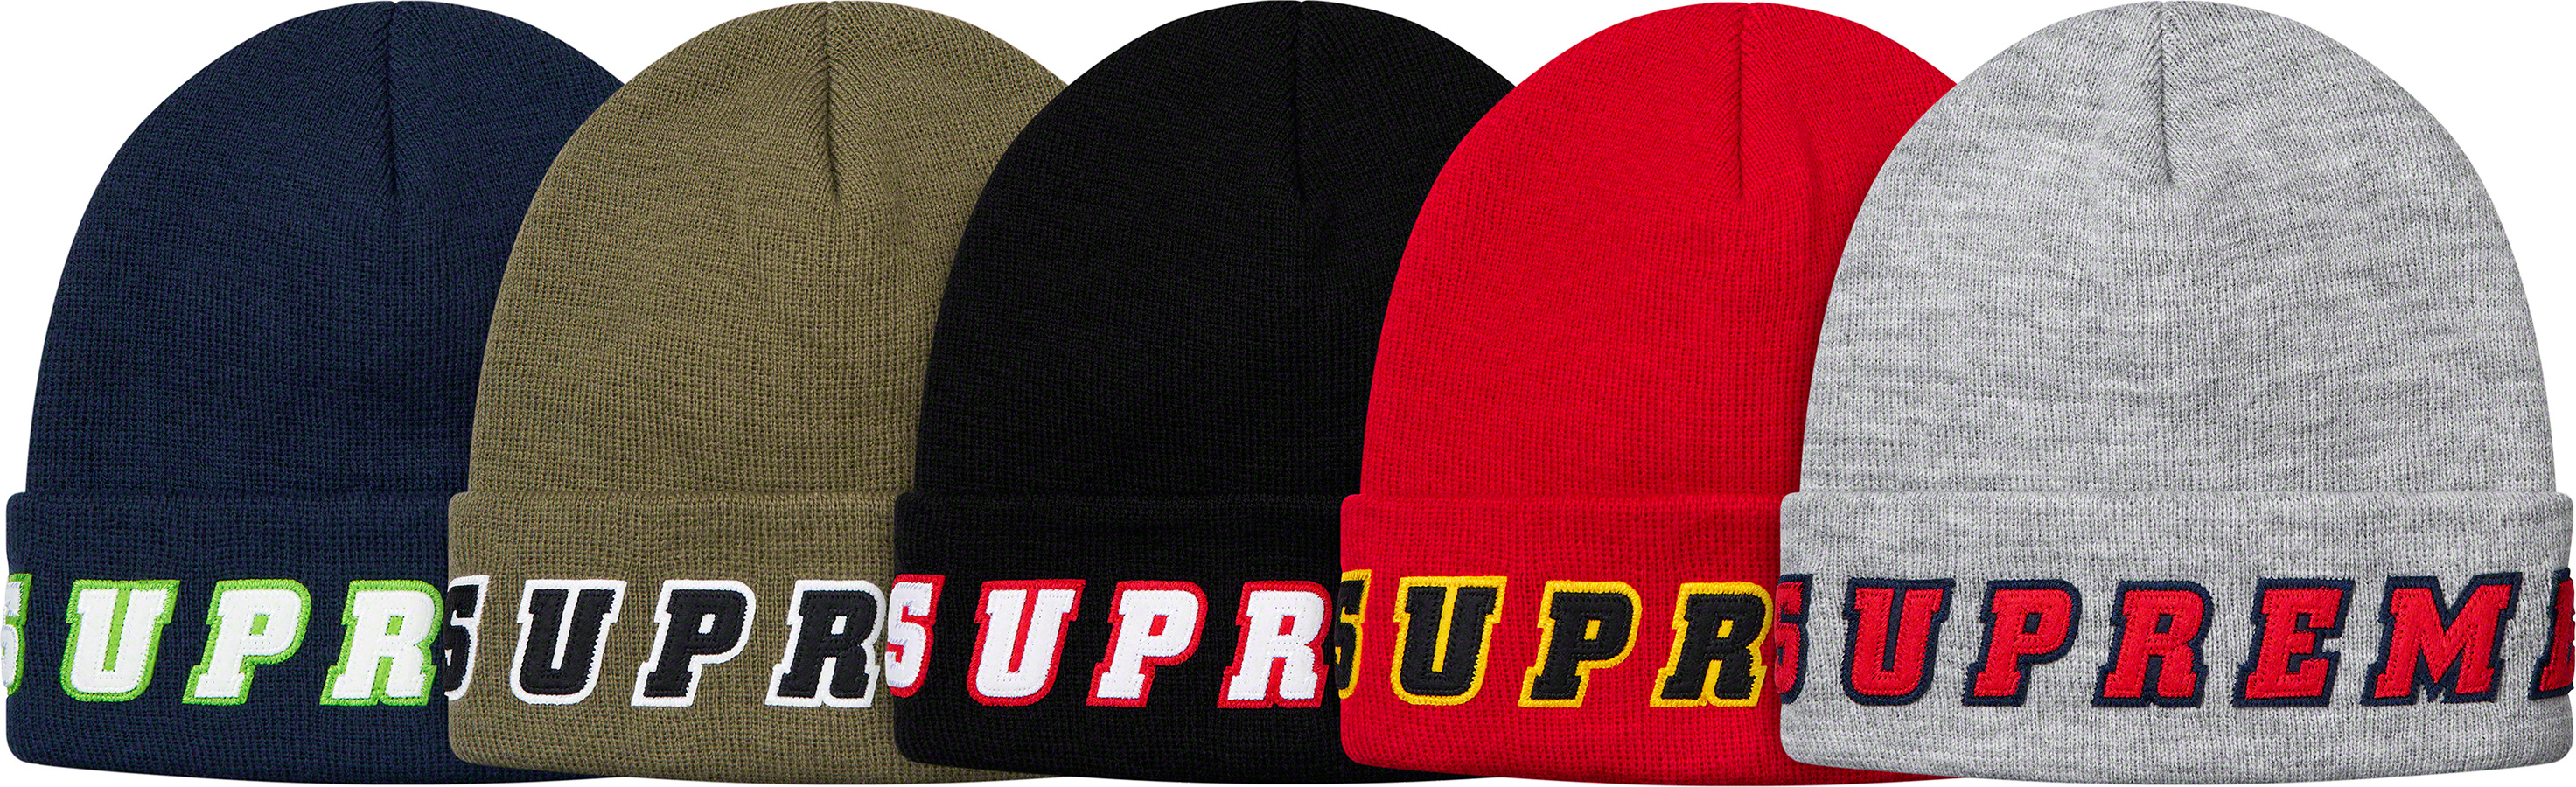 Supreme Felt Logo Beanie - Red Hats, Accessories - WSPME65753